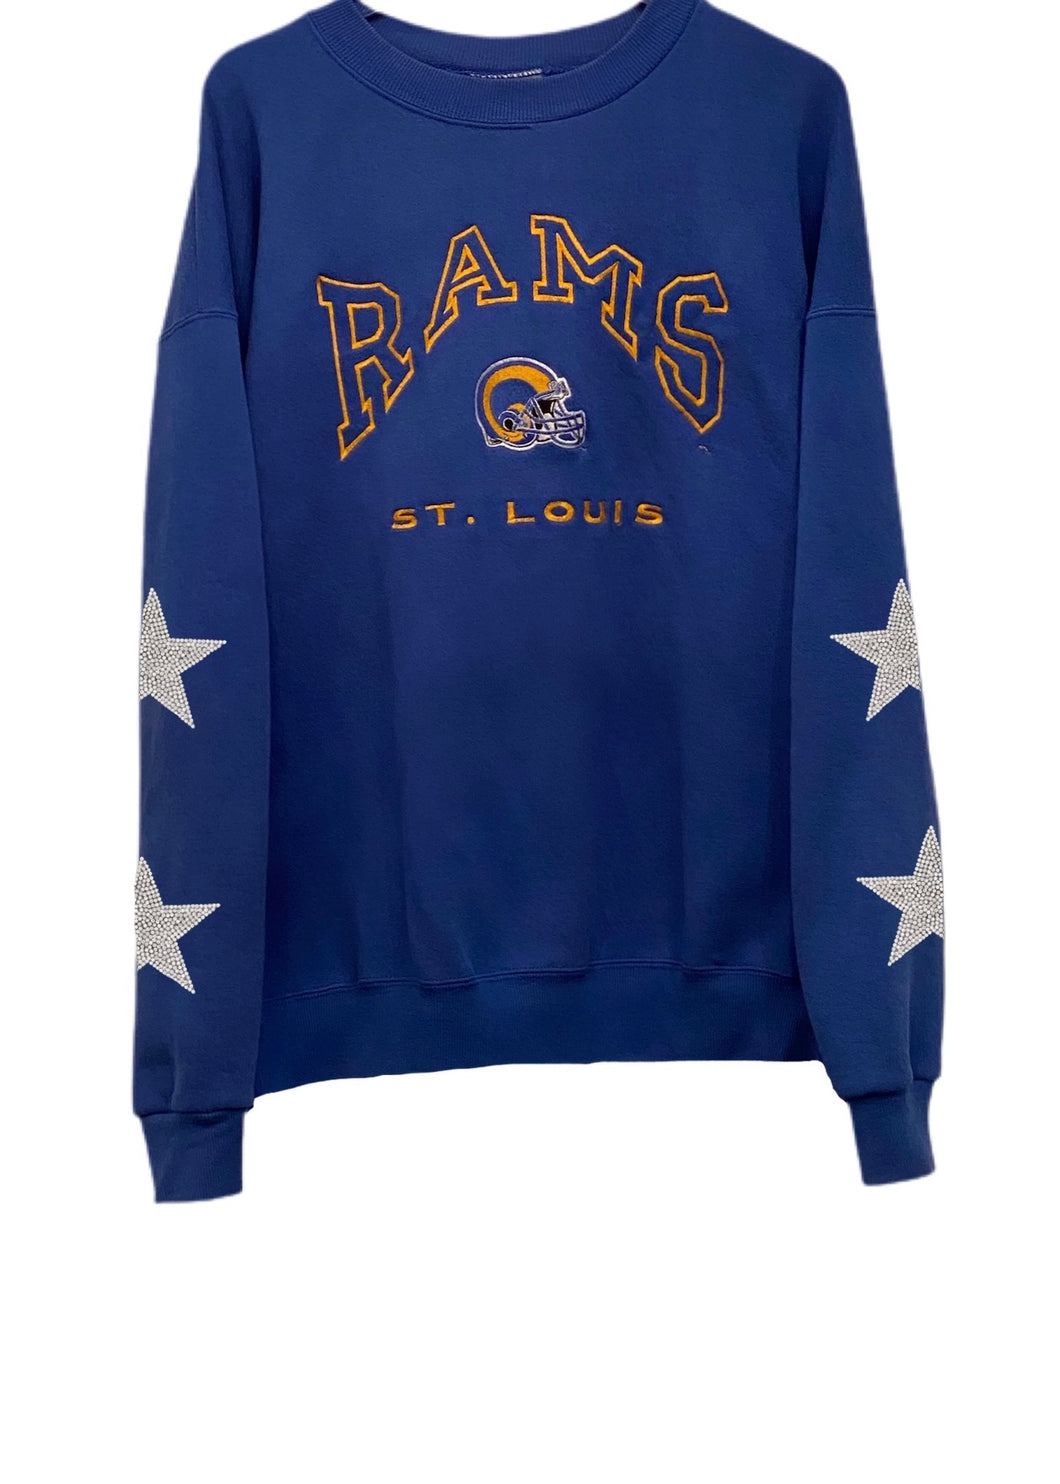 St. Louis/Los Angeles Rams, NFL One of a KIND Vintage LA Rams Sweatshirt with Crystal Star Design